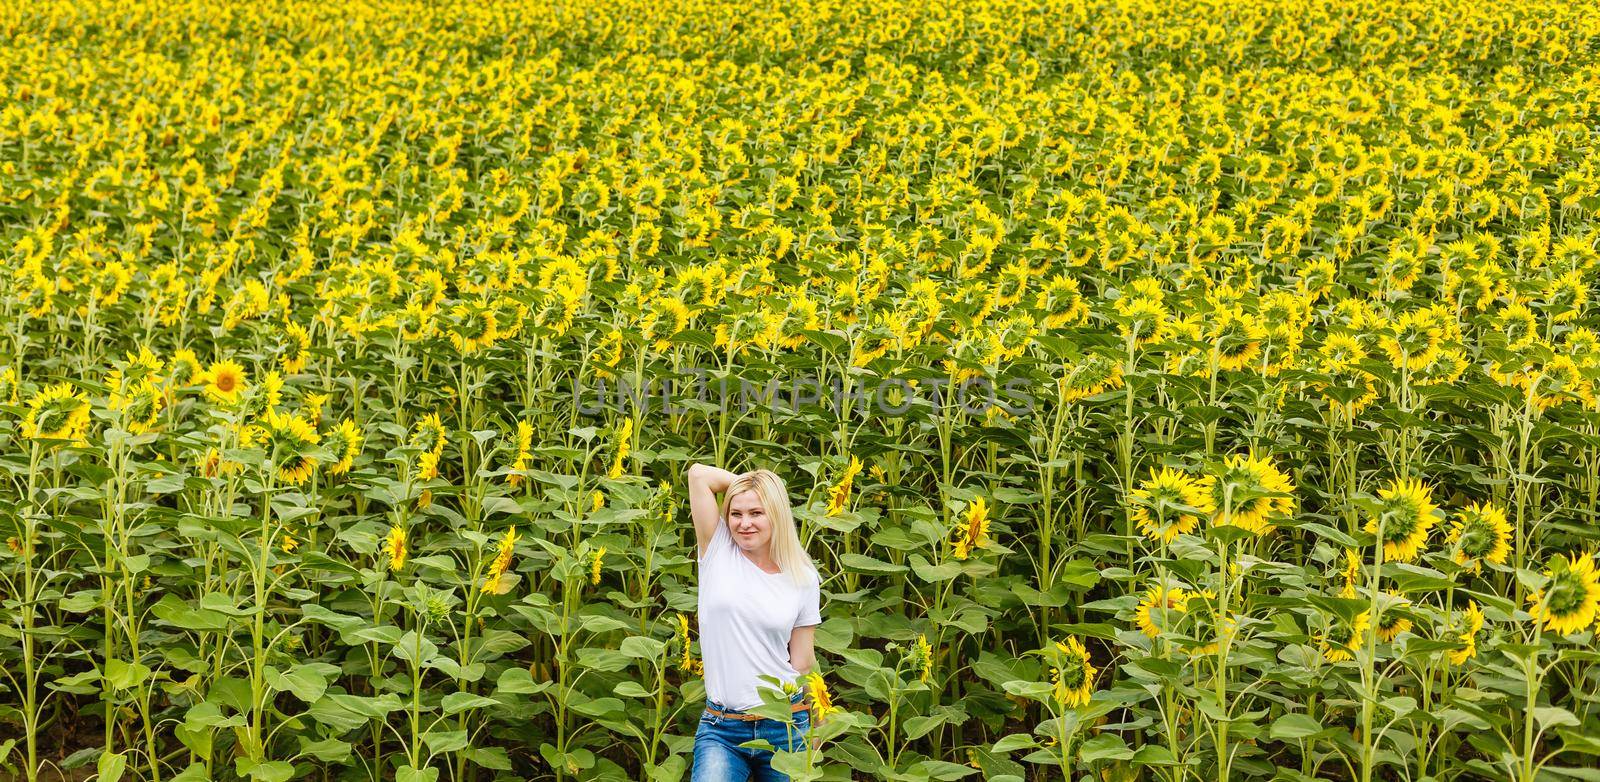 young beautiful woman between sunflowers